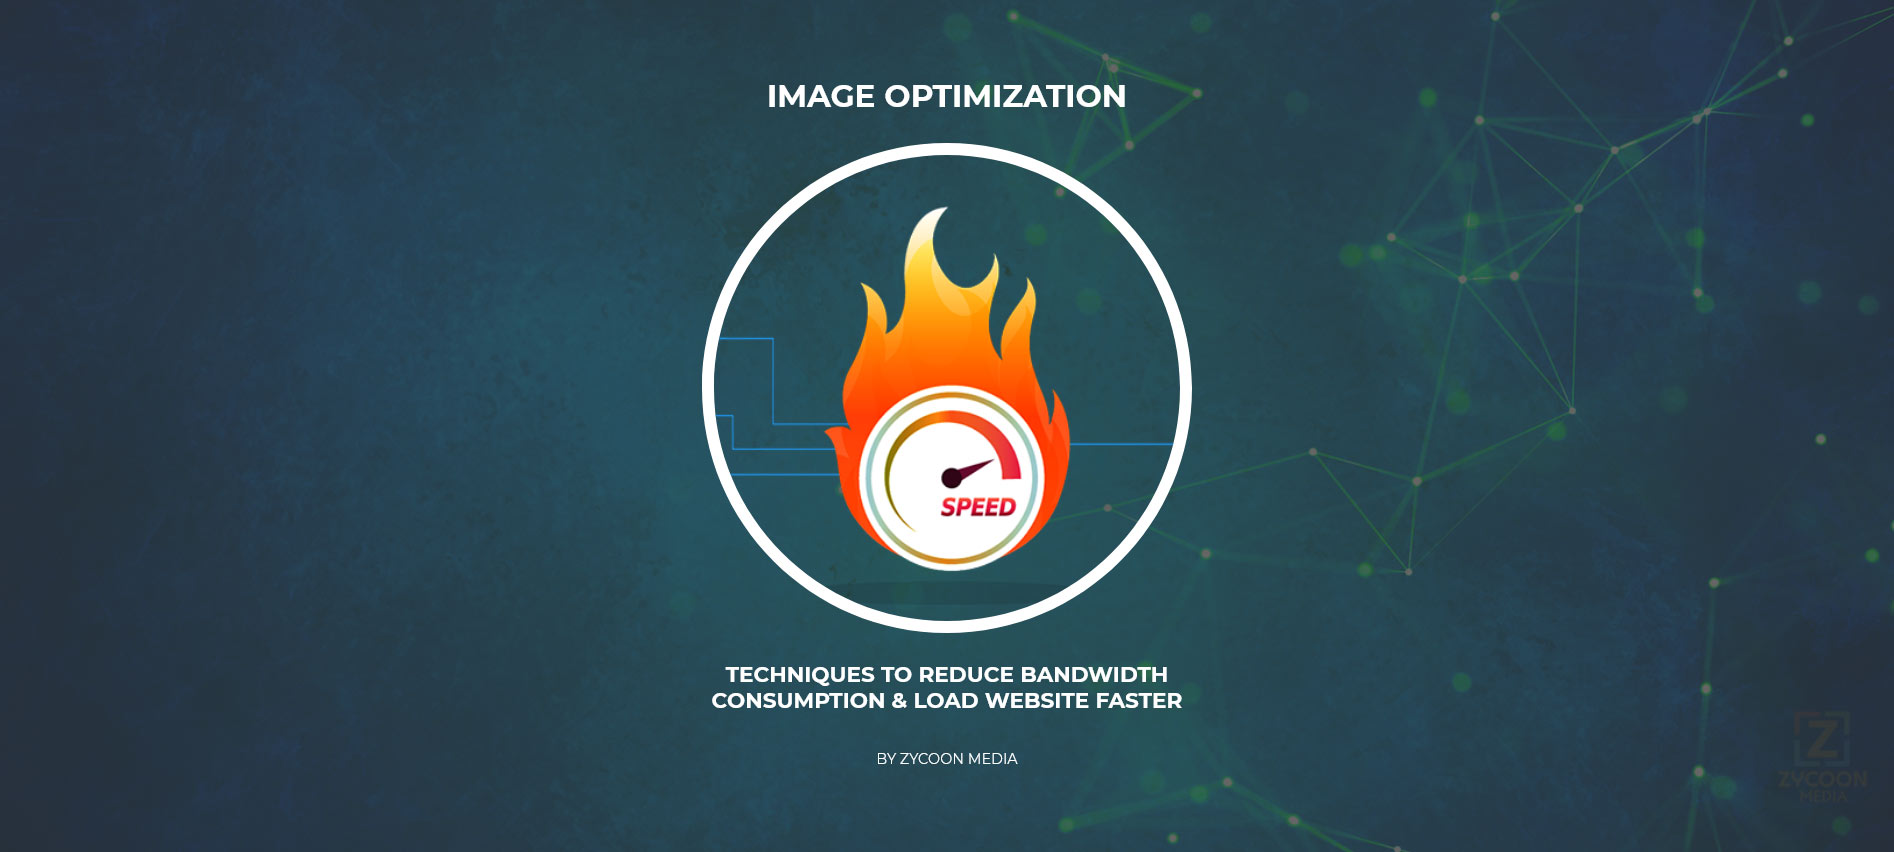 Image Optimization To Improve Website Speed